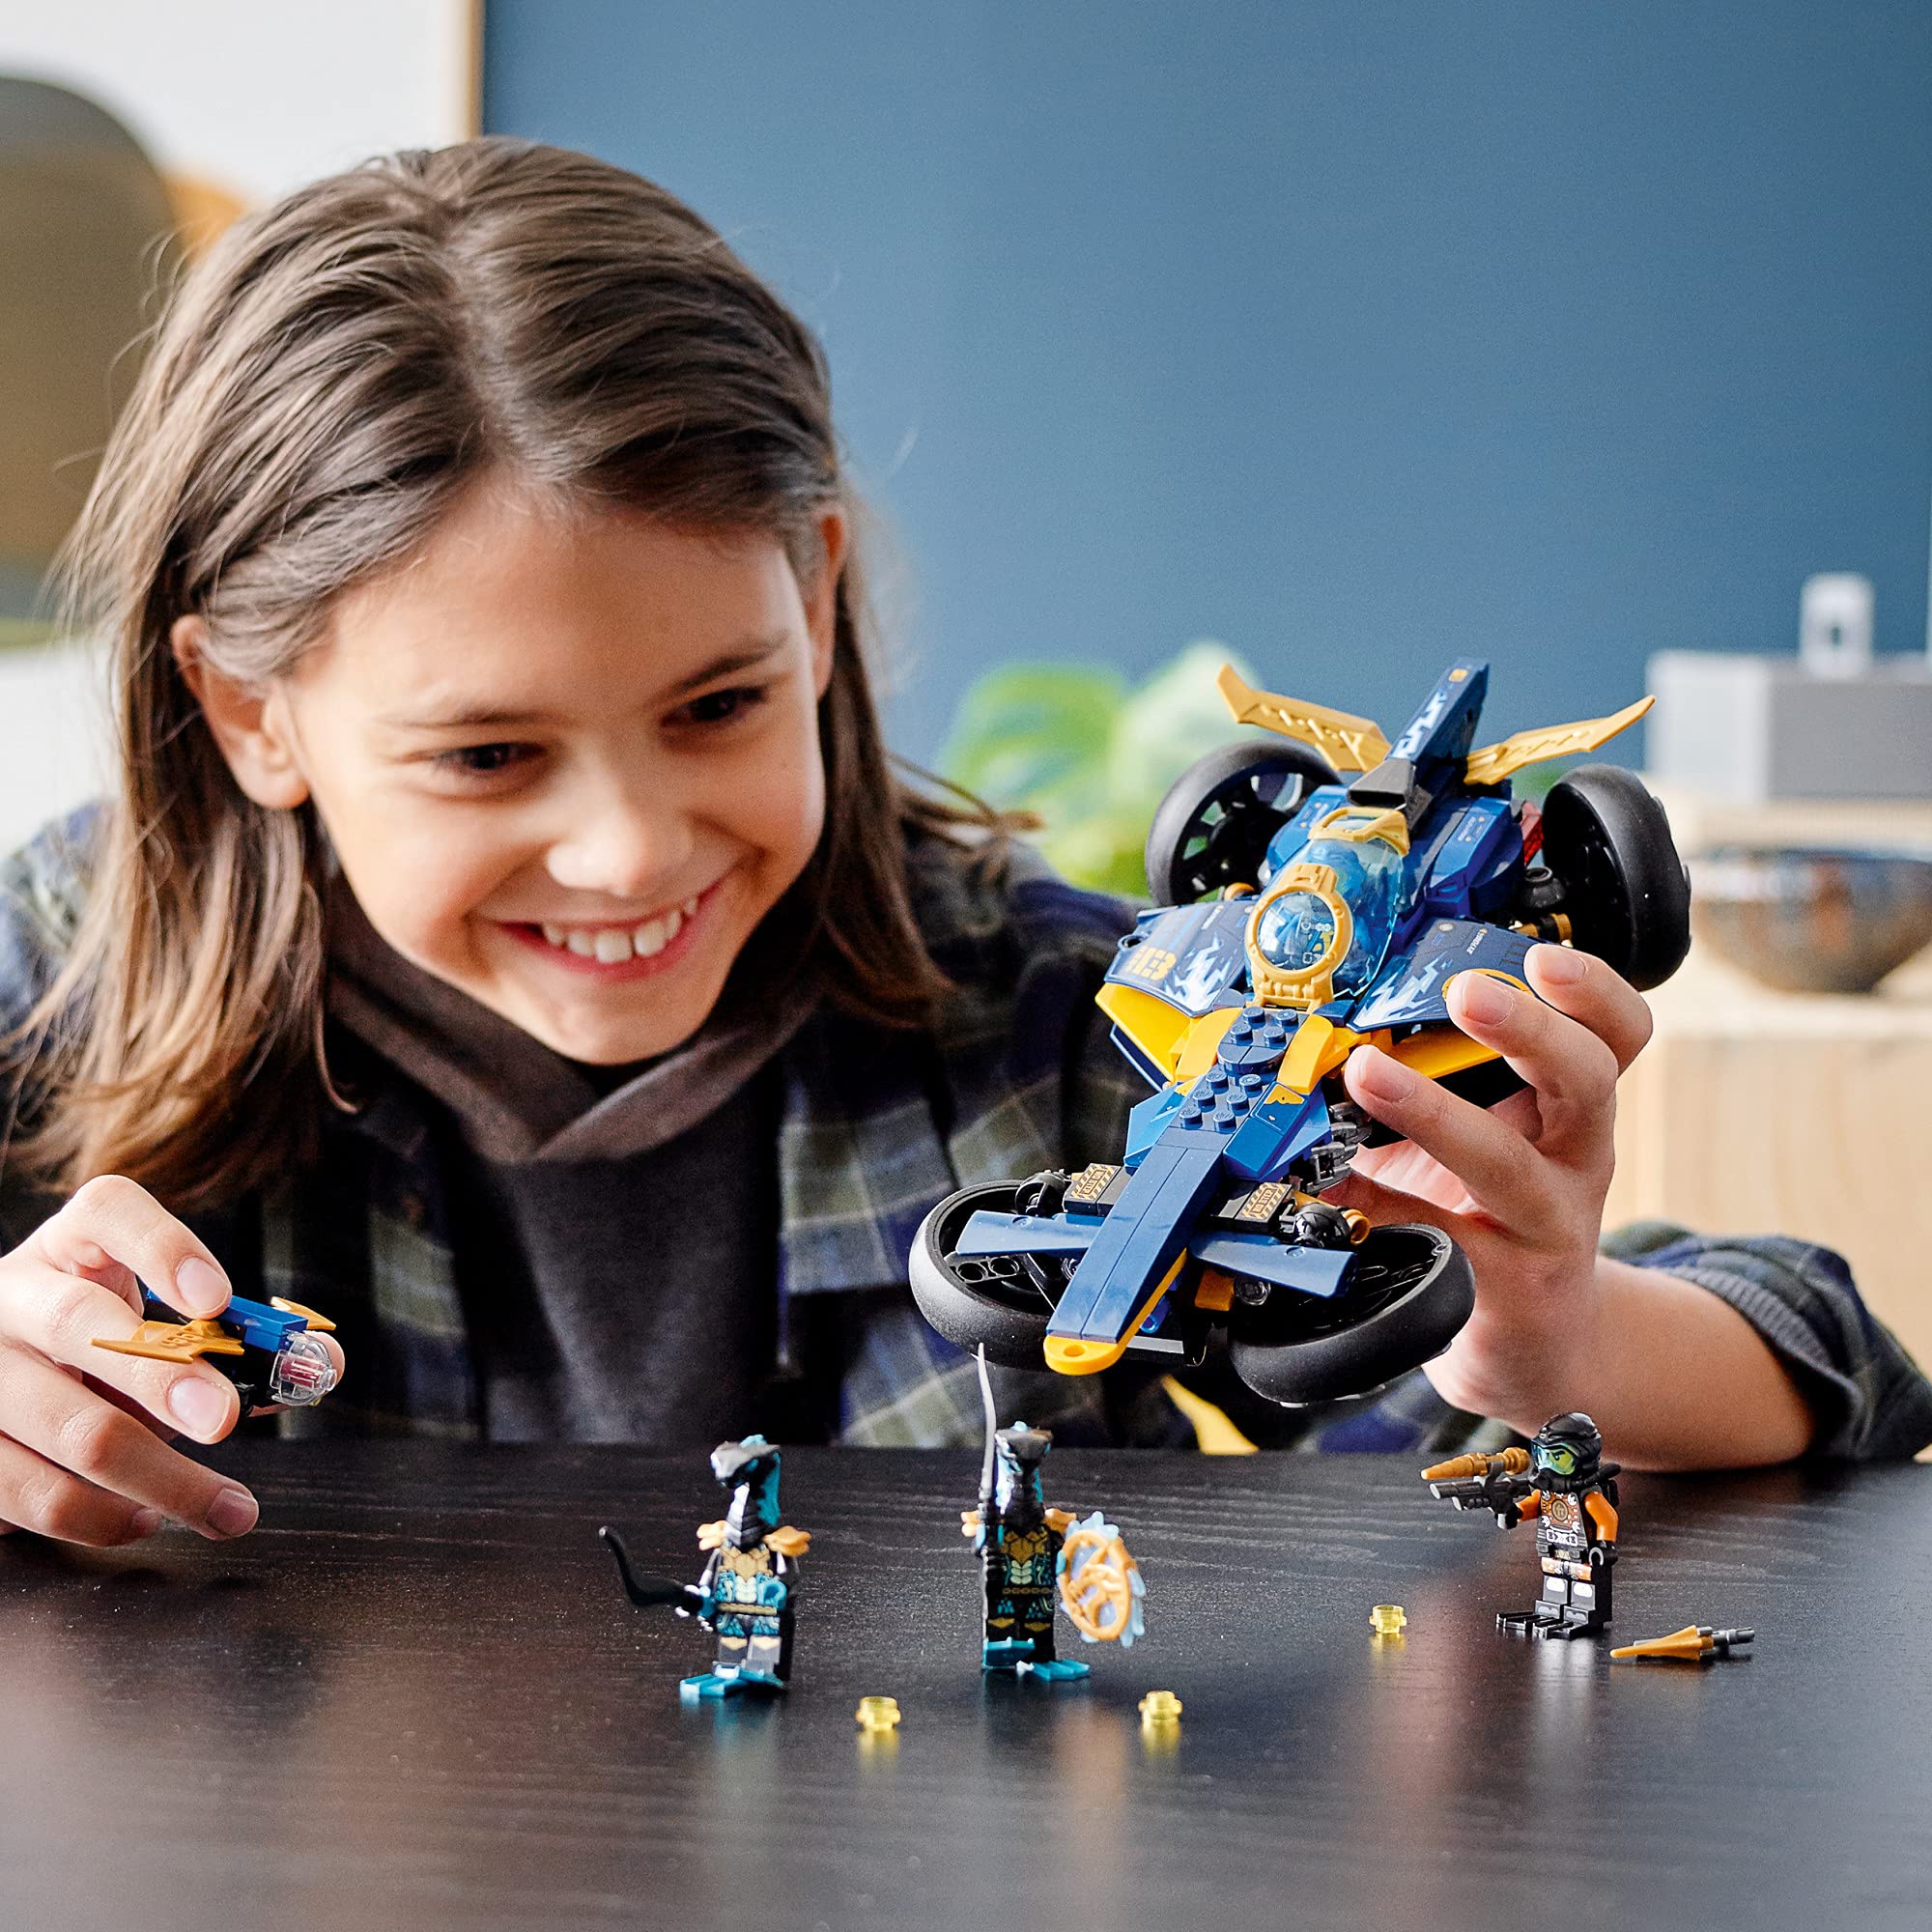 LEGO NINJAGO Ninja Sub Speeder 71752 Building Kit; Amphibious Car Toy with NINJAGO Cole and Jay Minifigures; New 2021 (356 Pieces)